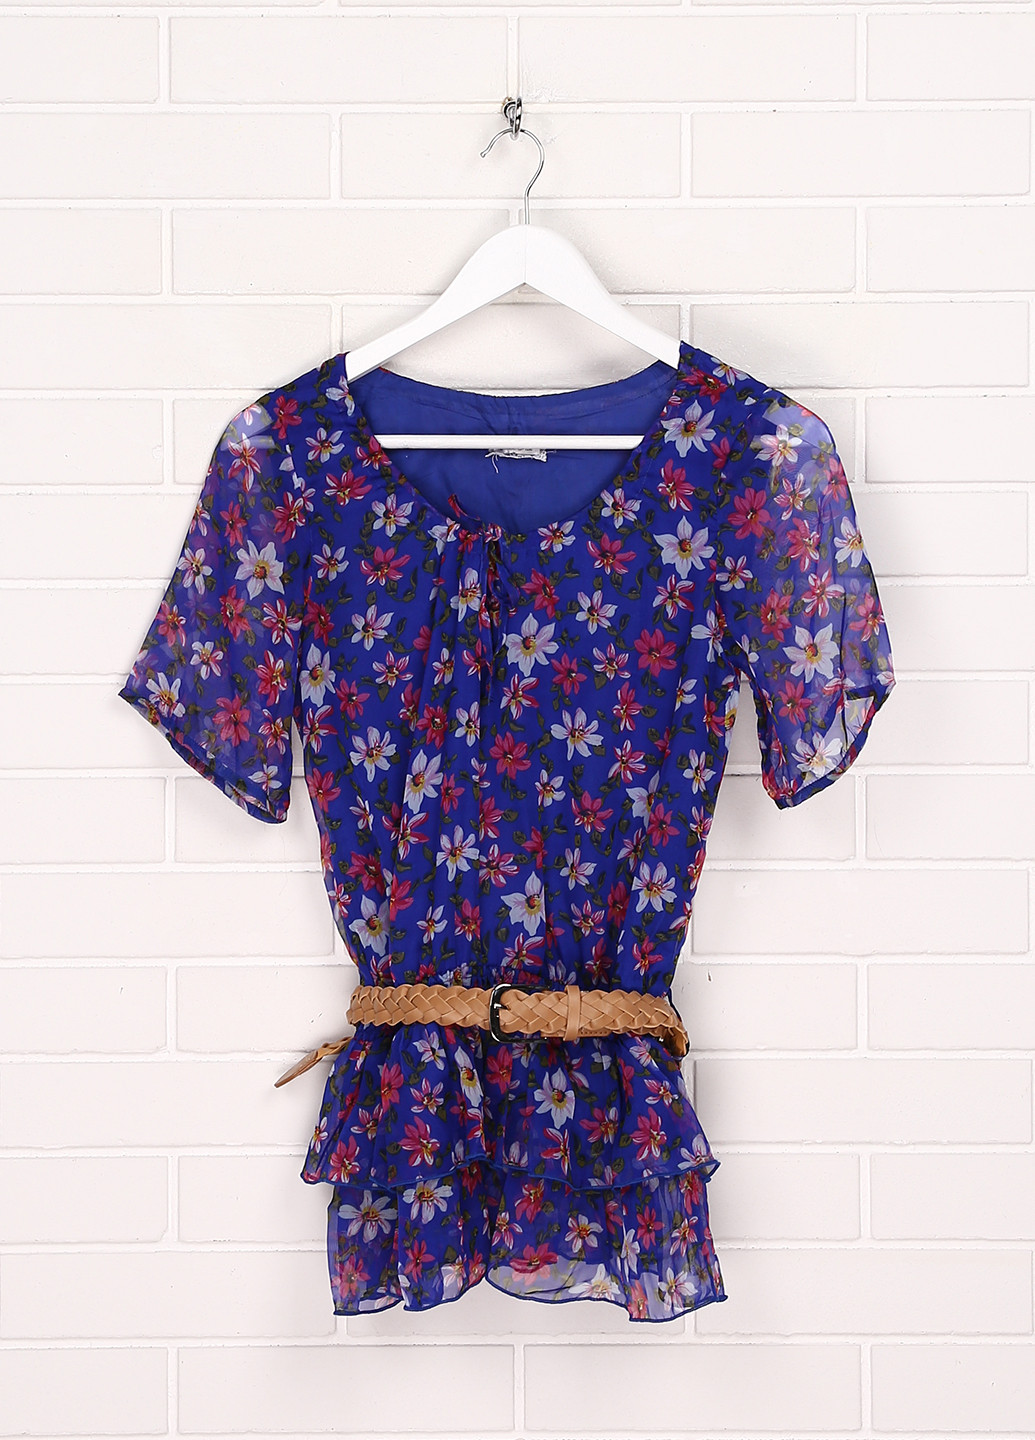 Темно-синяя цветочной расцветки блузка Fun & Fun летняя